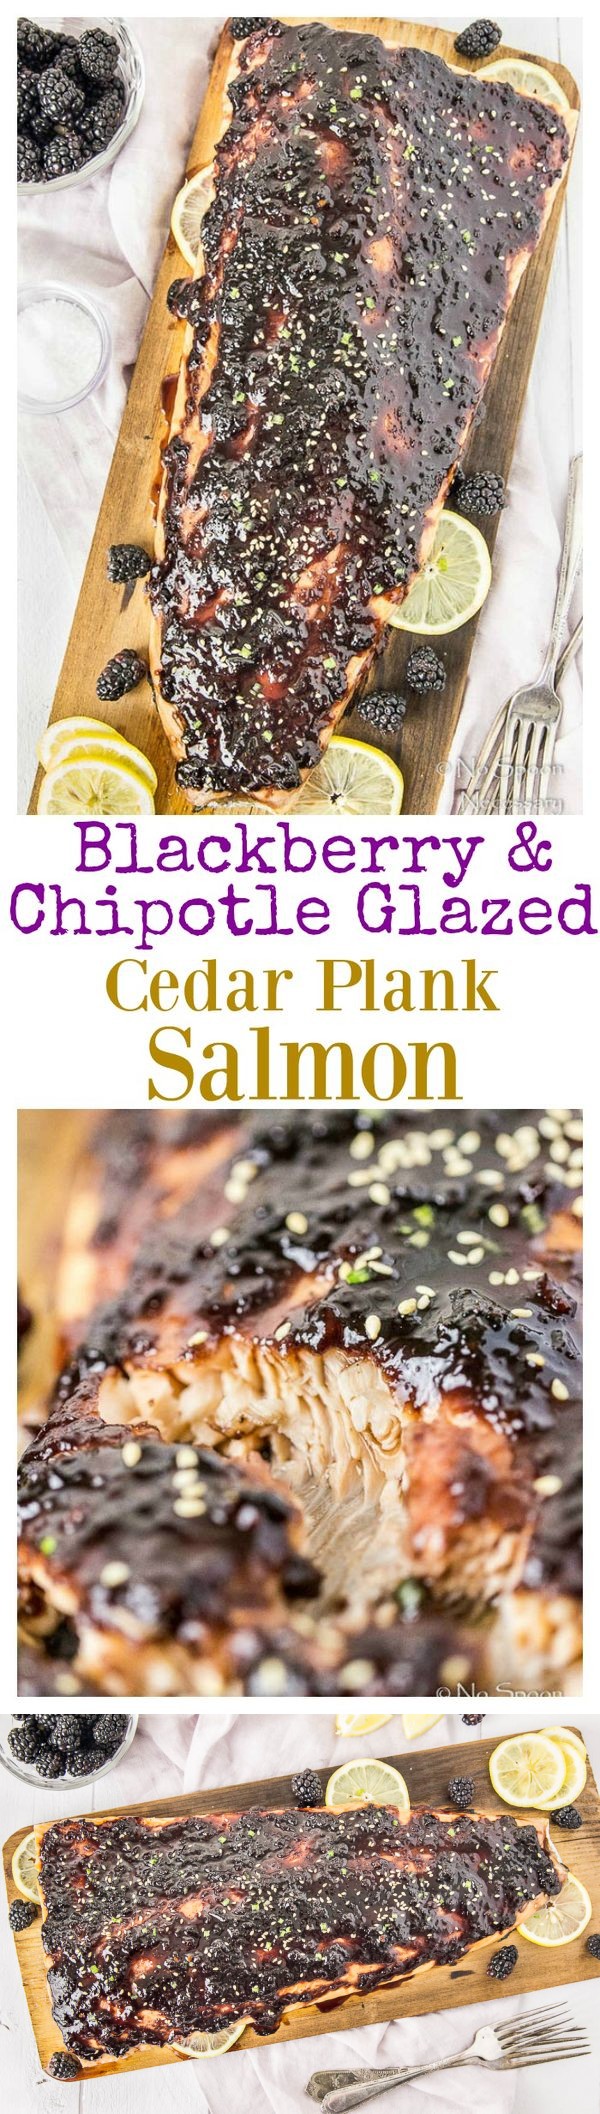 Blackberry-Chipotle Glazed Cedar Plank Salmon